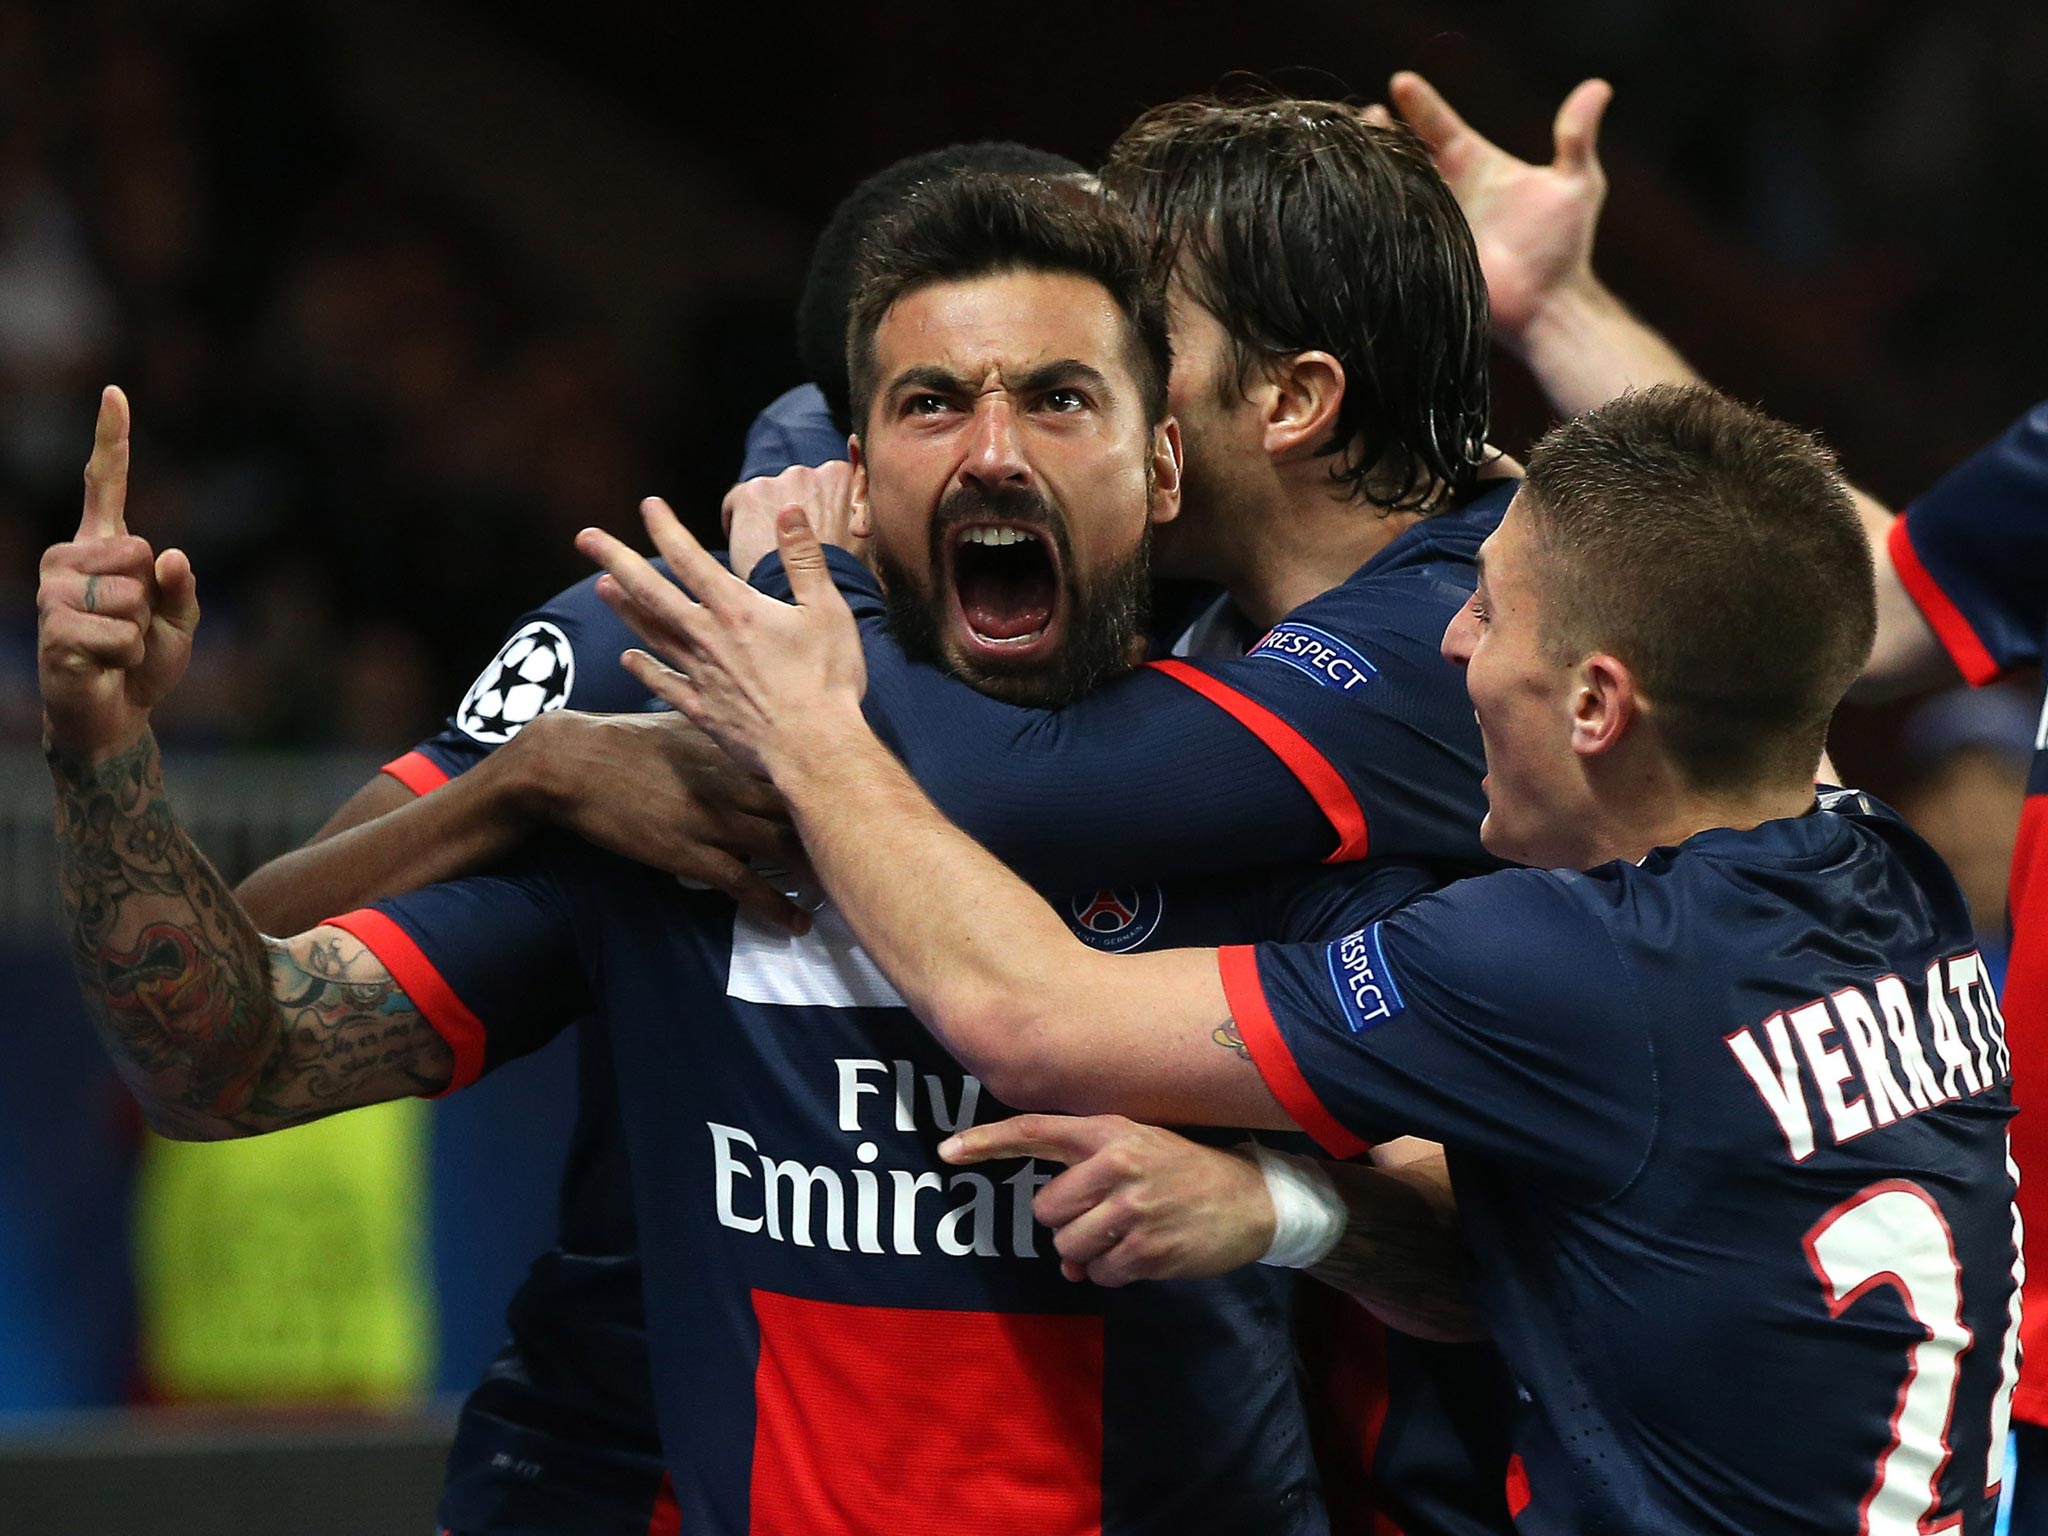 Ezequiel Lavezzi celebrates after opening the scoring for Paris
Saint-Germain in the first leg against Chelsea